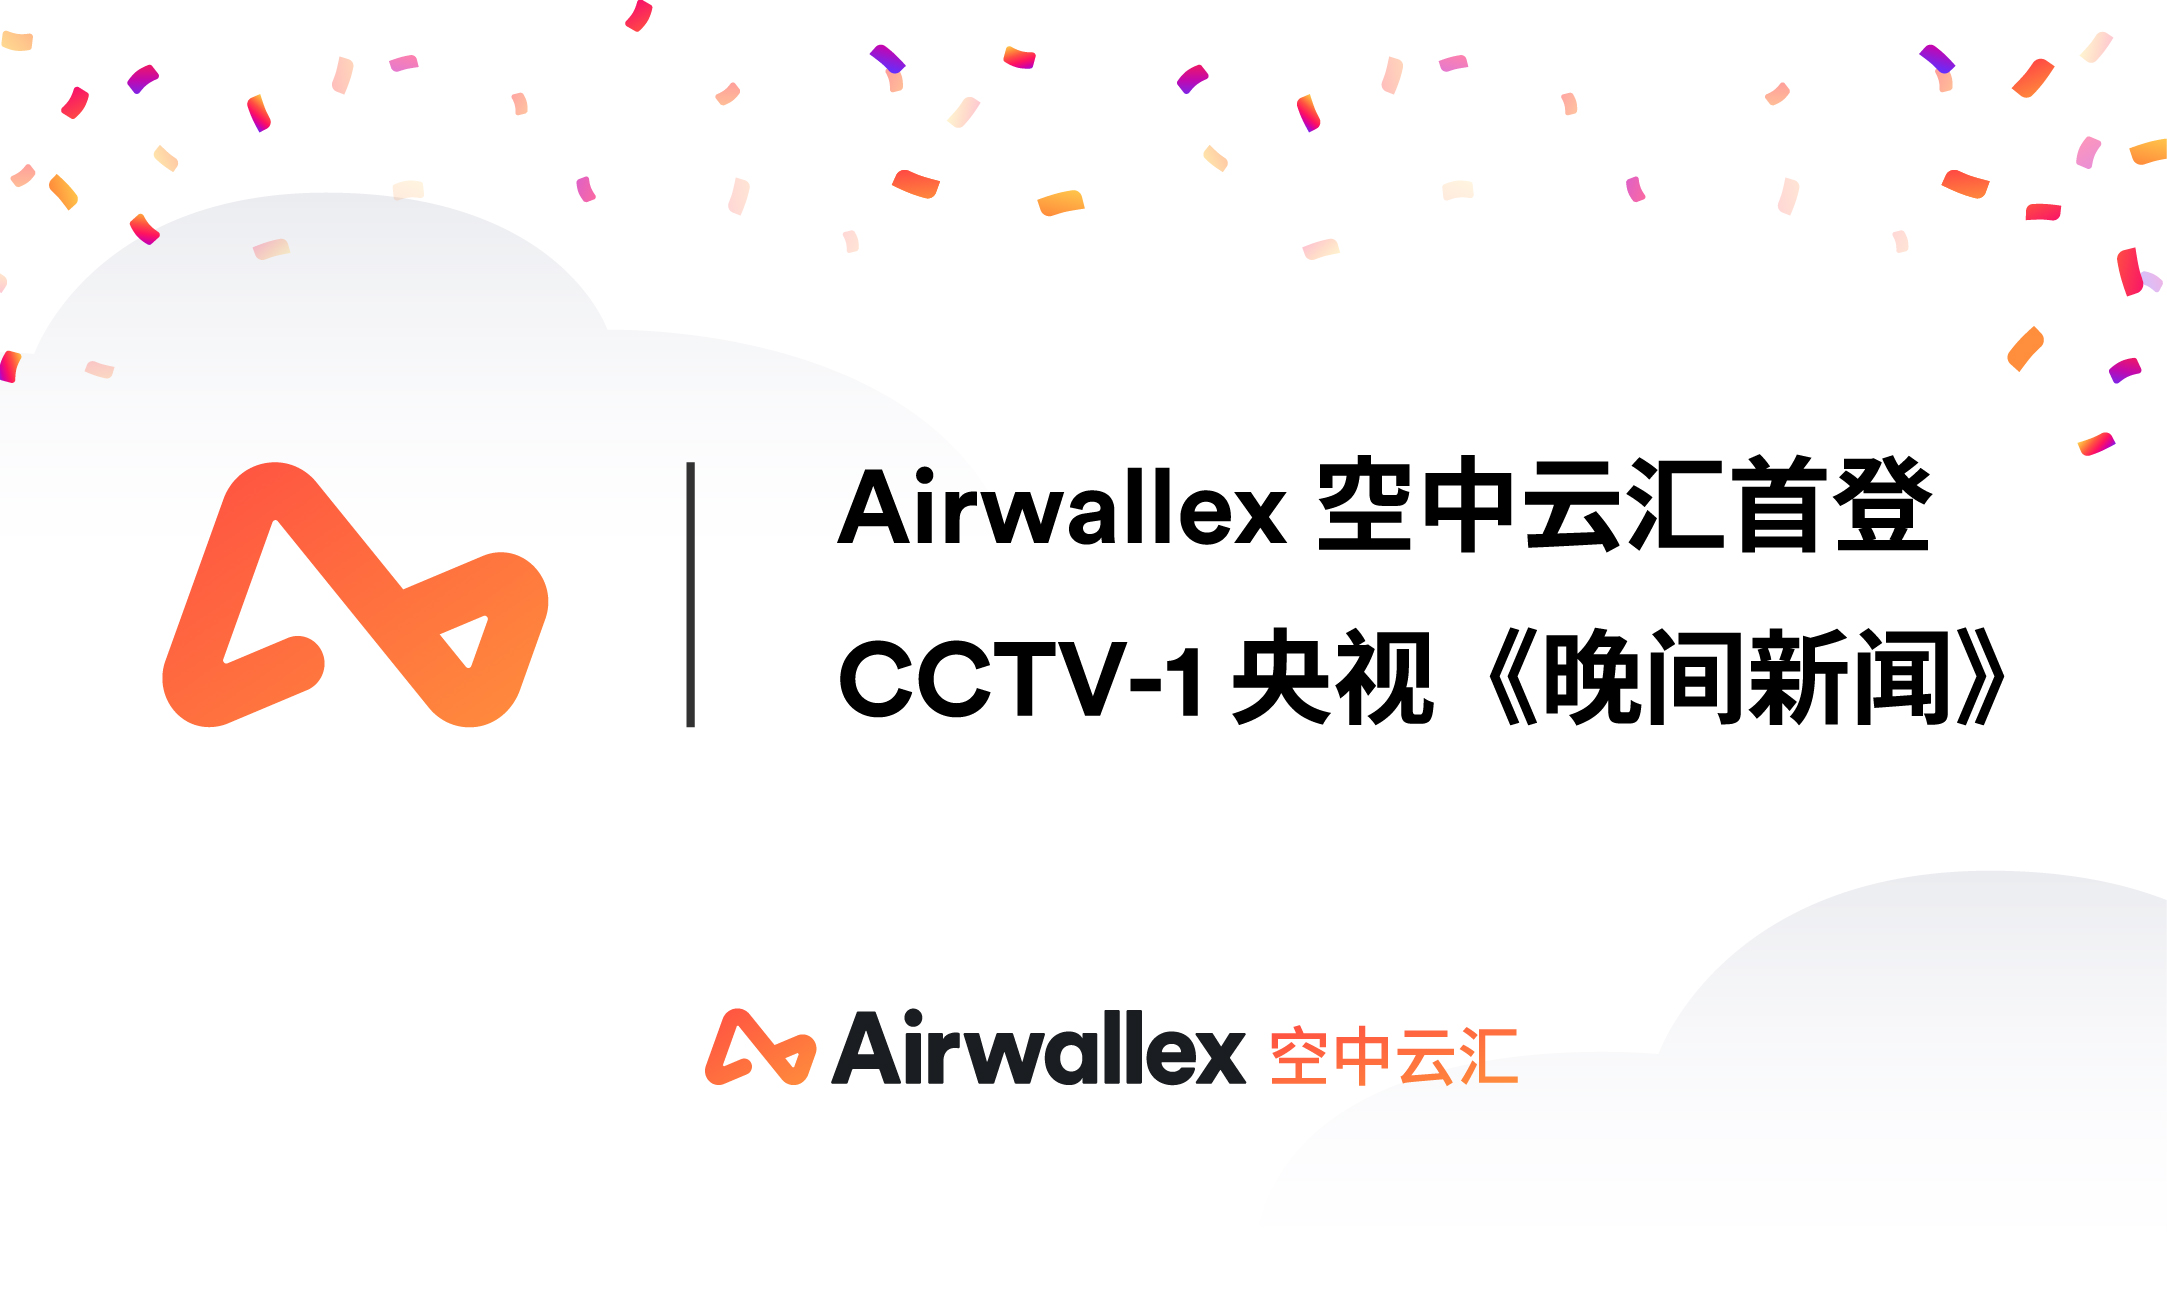 CCTV-1《晚间新闻》报道｜Airwallex空中云汇亮相2023年中国国际电子商务博览会